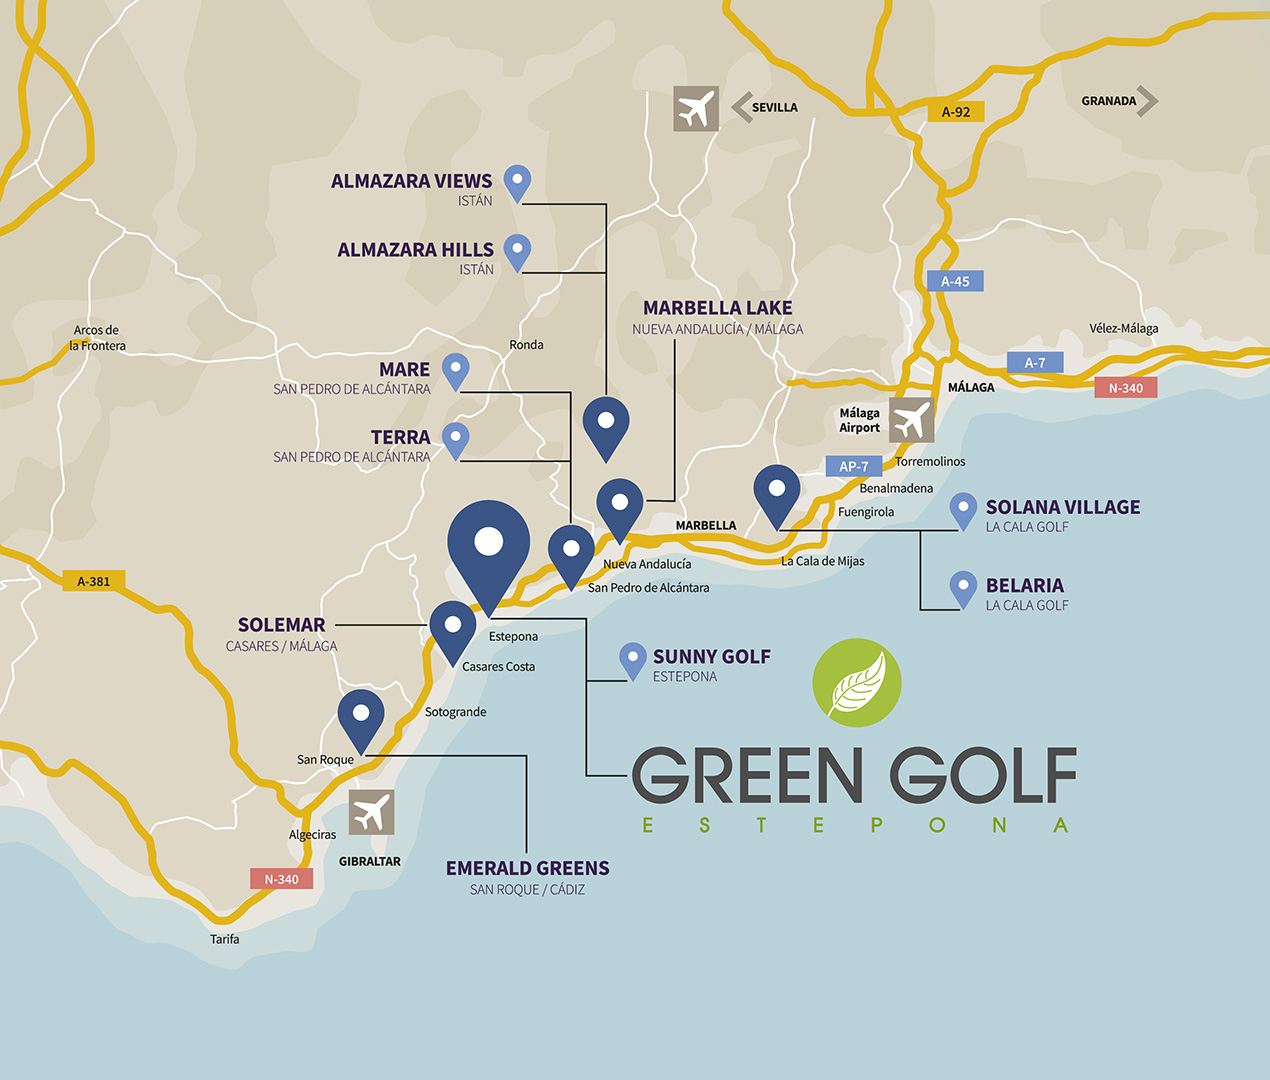 Mapa GREEN GOLF 2311 movil es